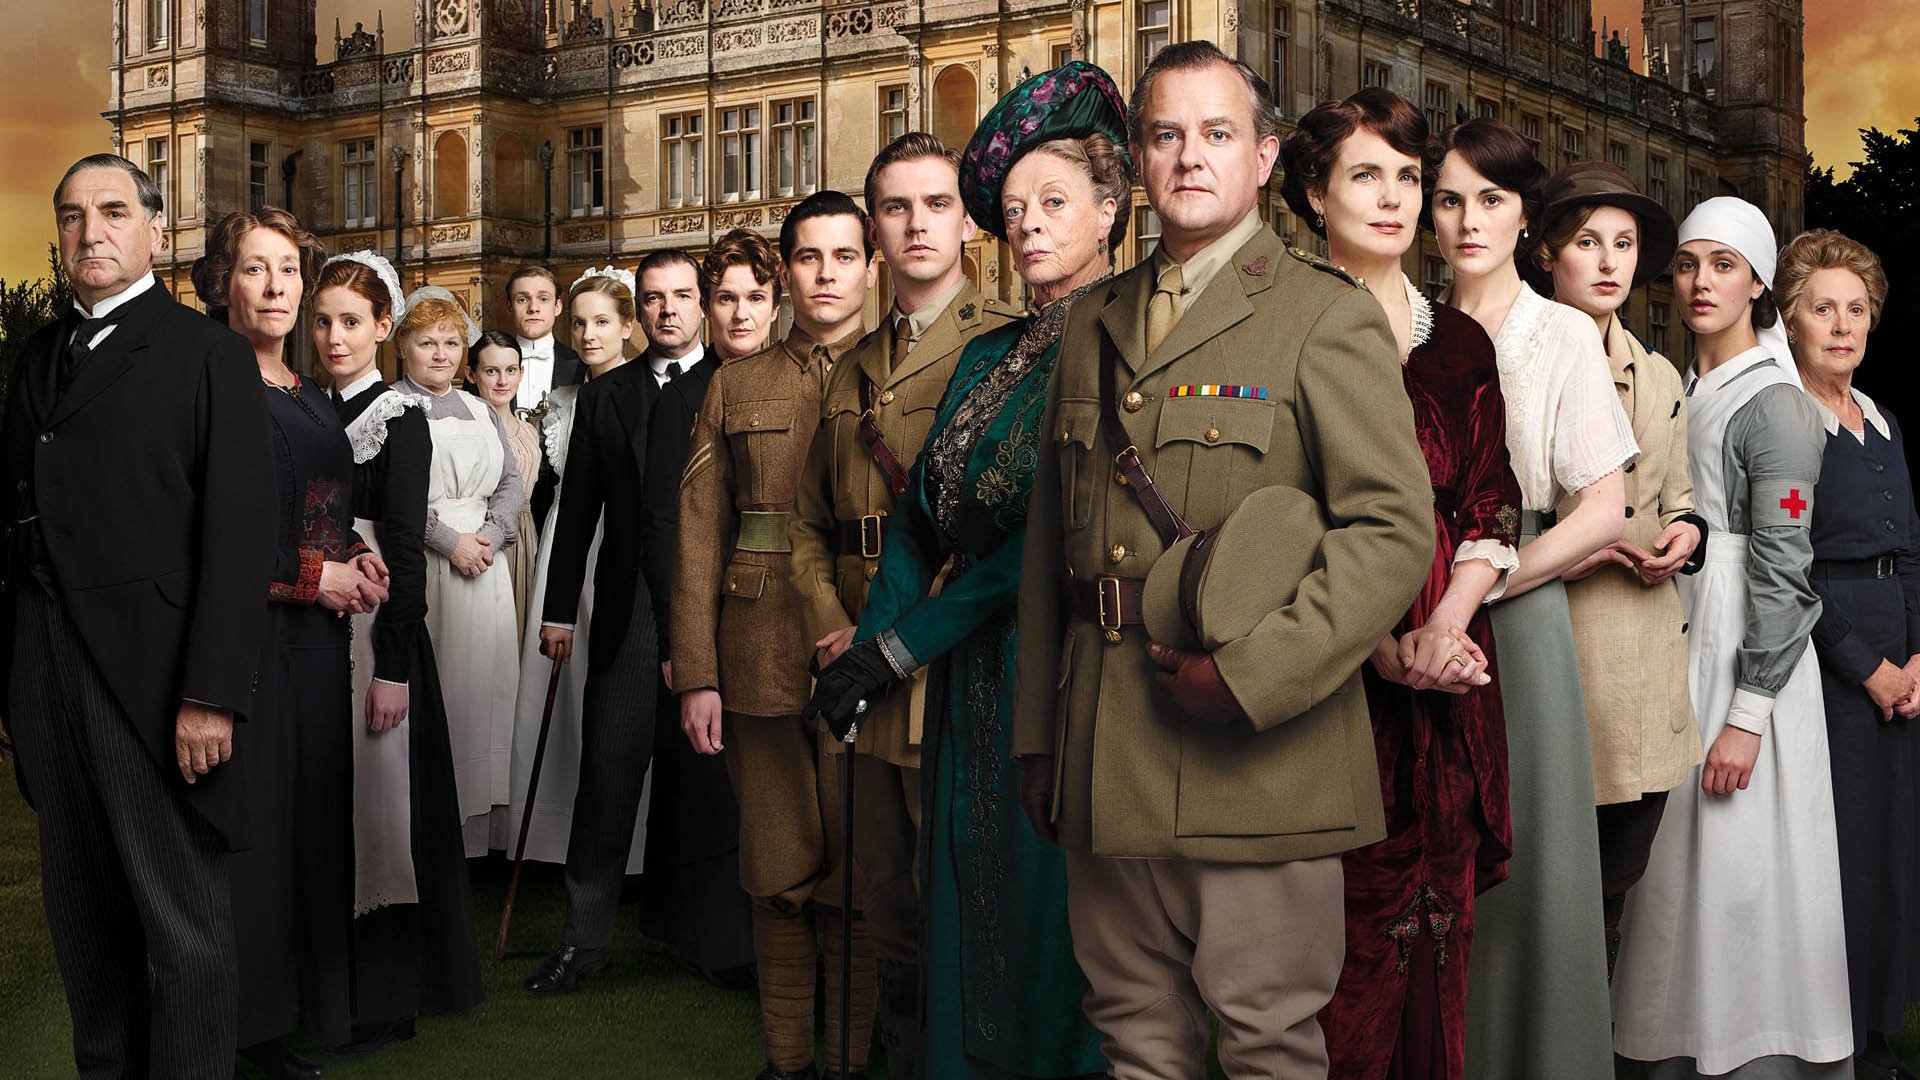 Downton abbey’s season 5 kicks off 2015! (spoilers)